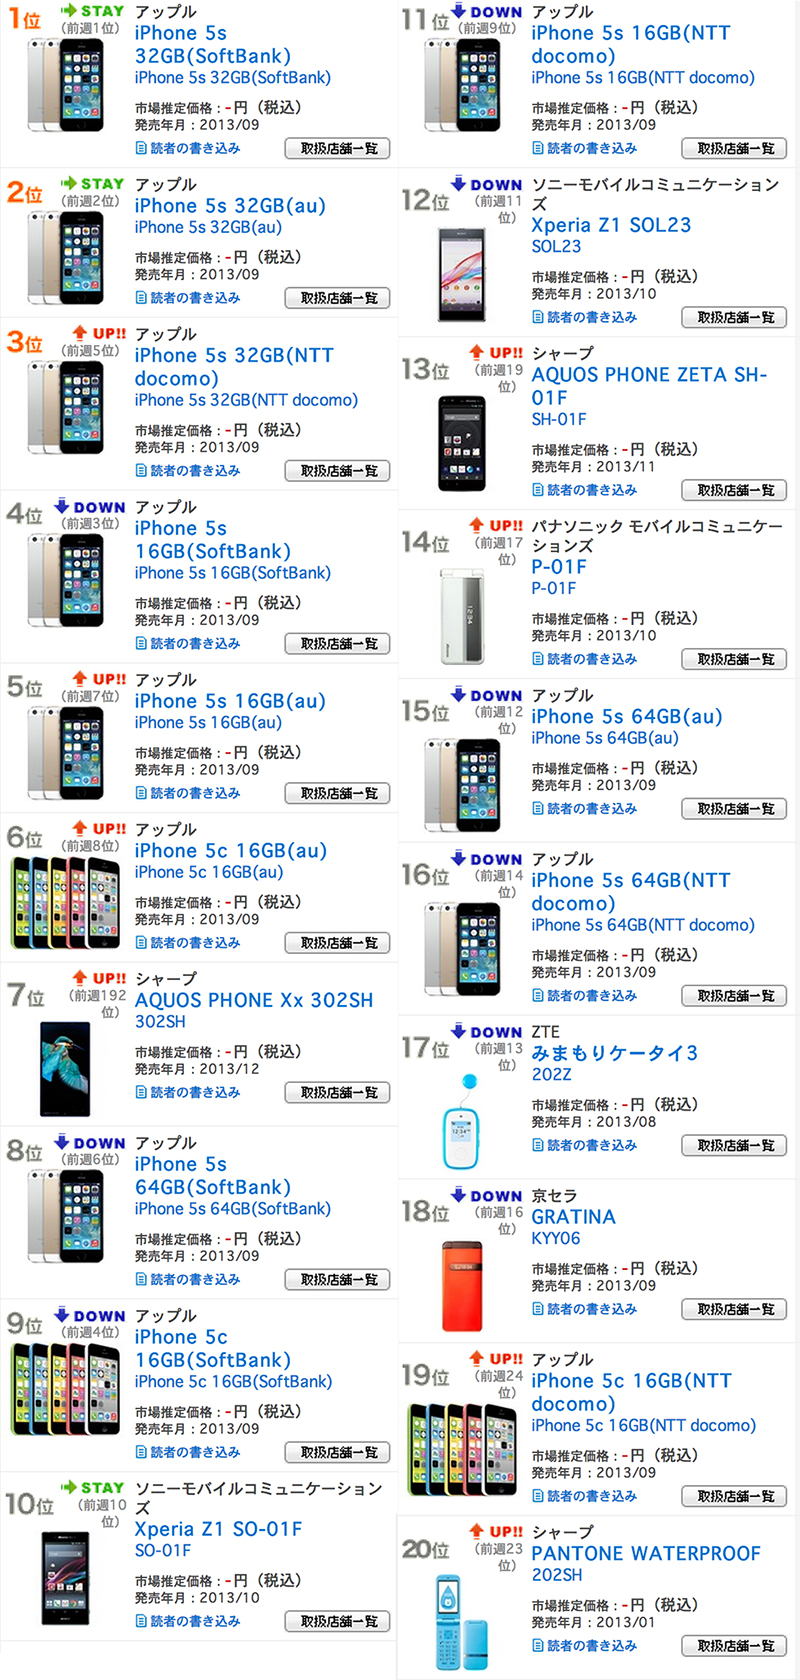 bcn-japan-iphone.jpg